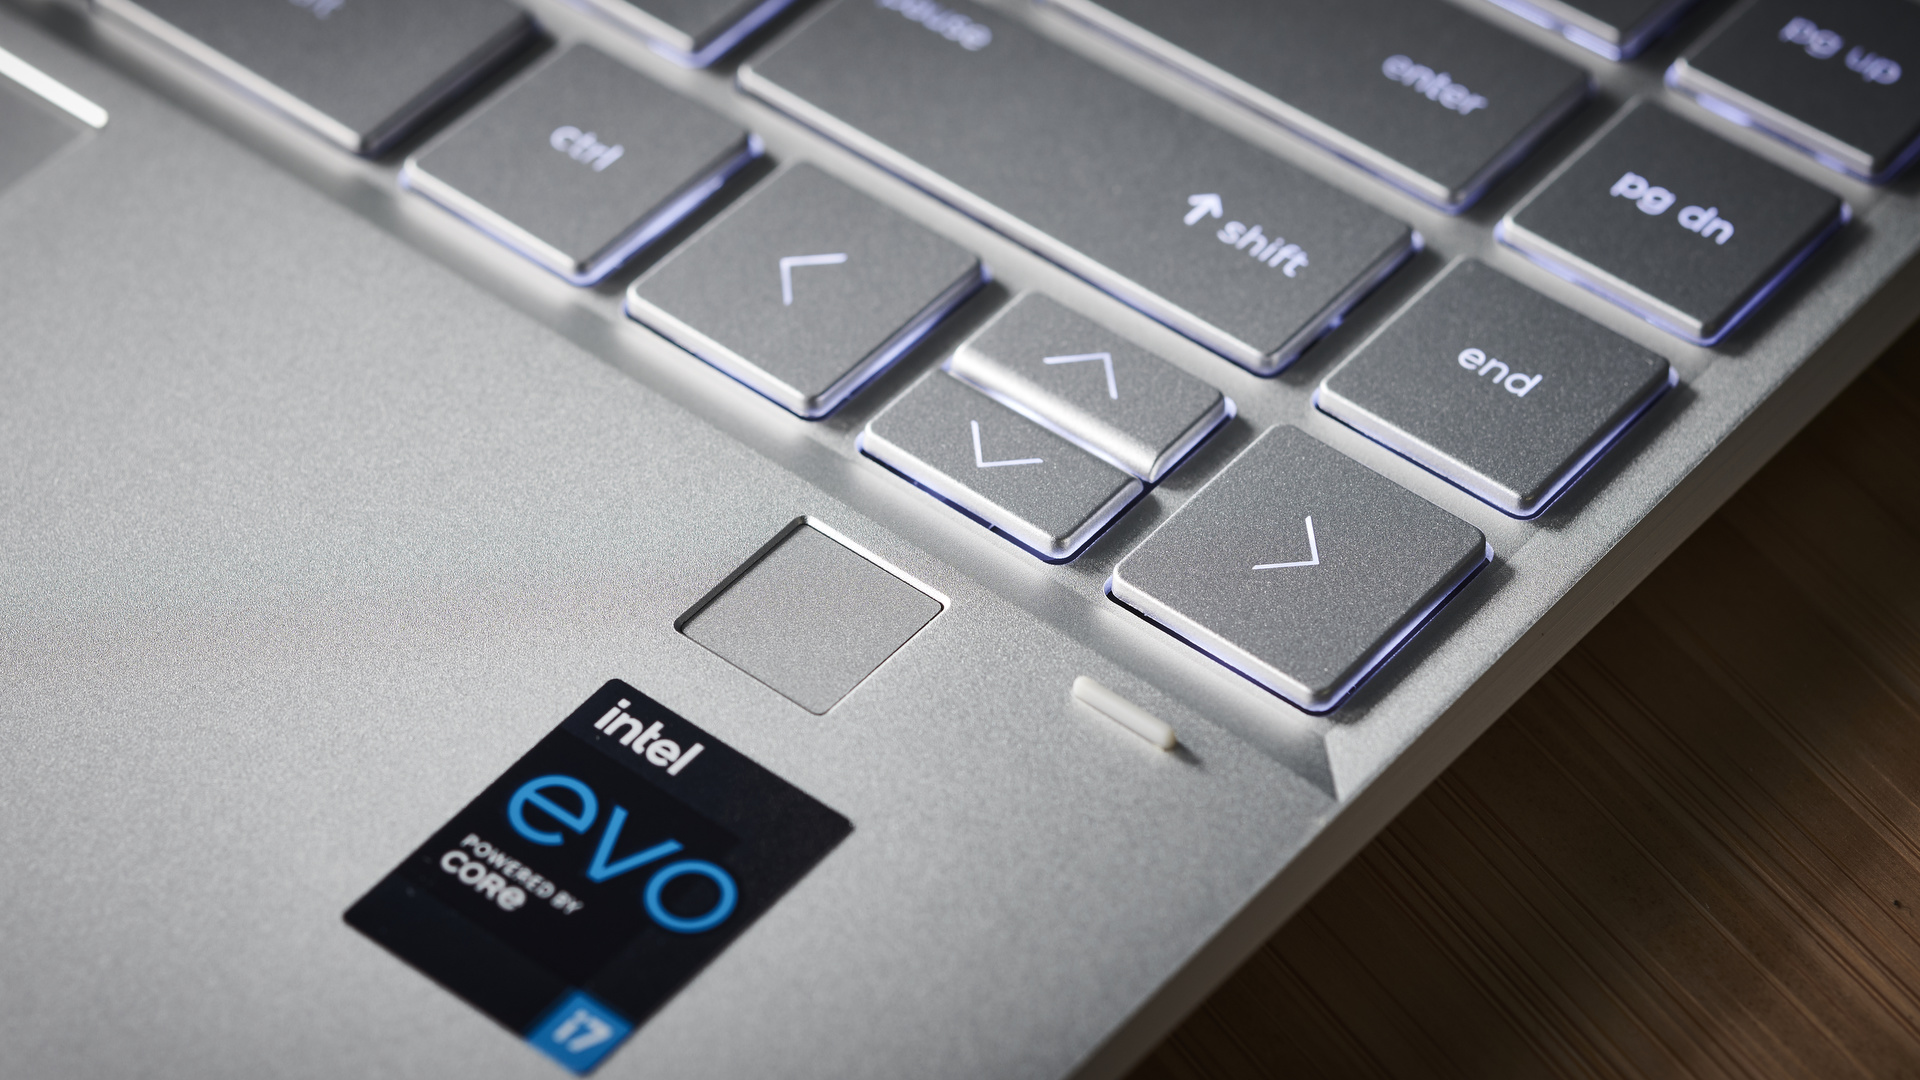 HP Spectre x360 (2021) showcasing its Intel Evo logo and fingerprint login